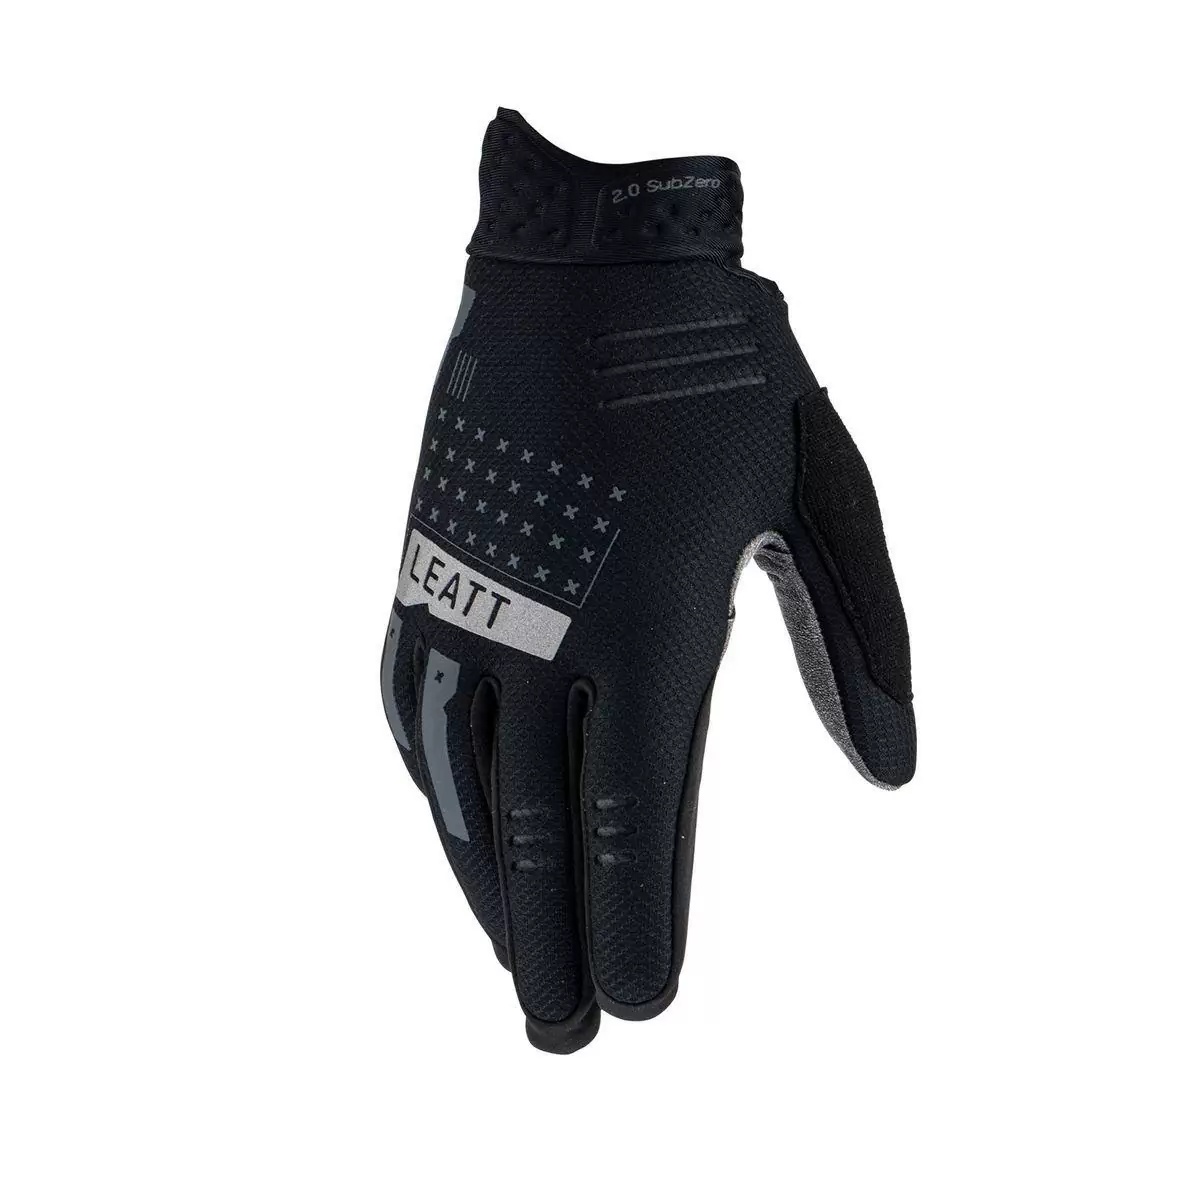 Winter Glove Mtb 2.0 subzero Noir taille M #2